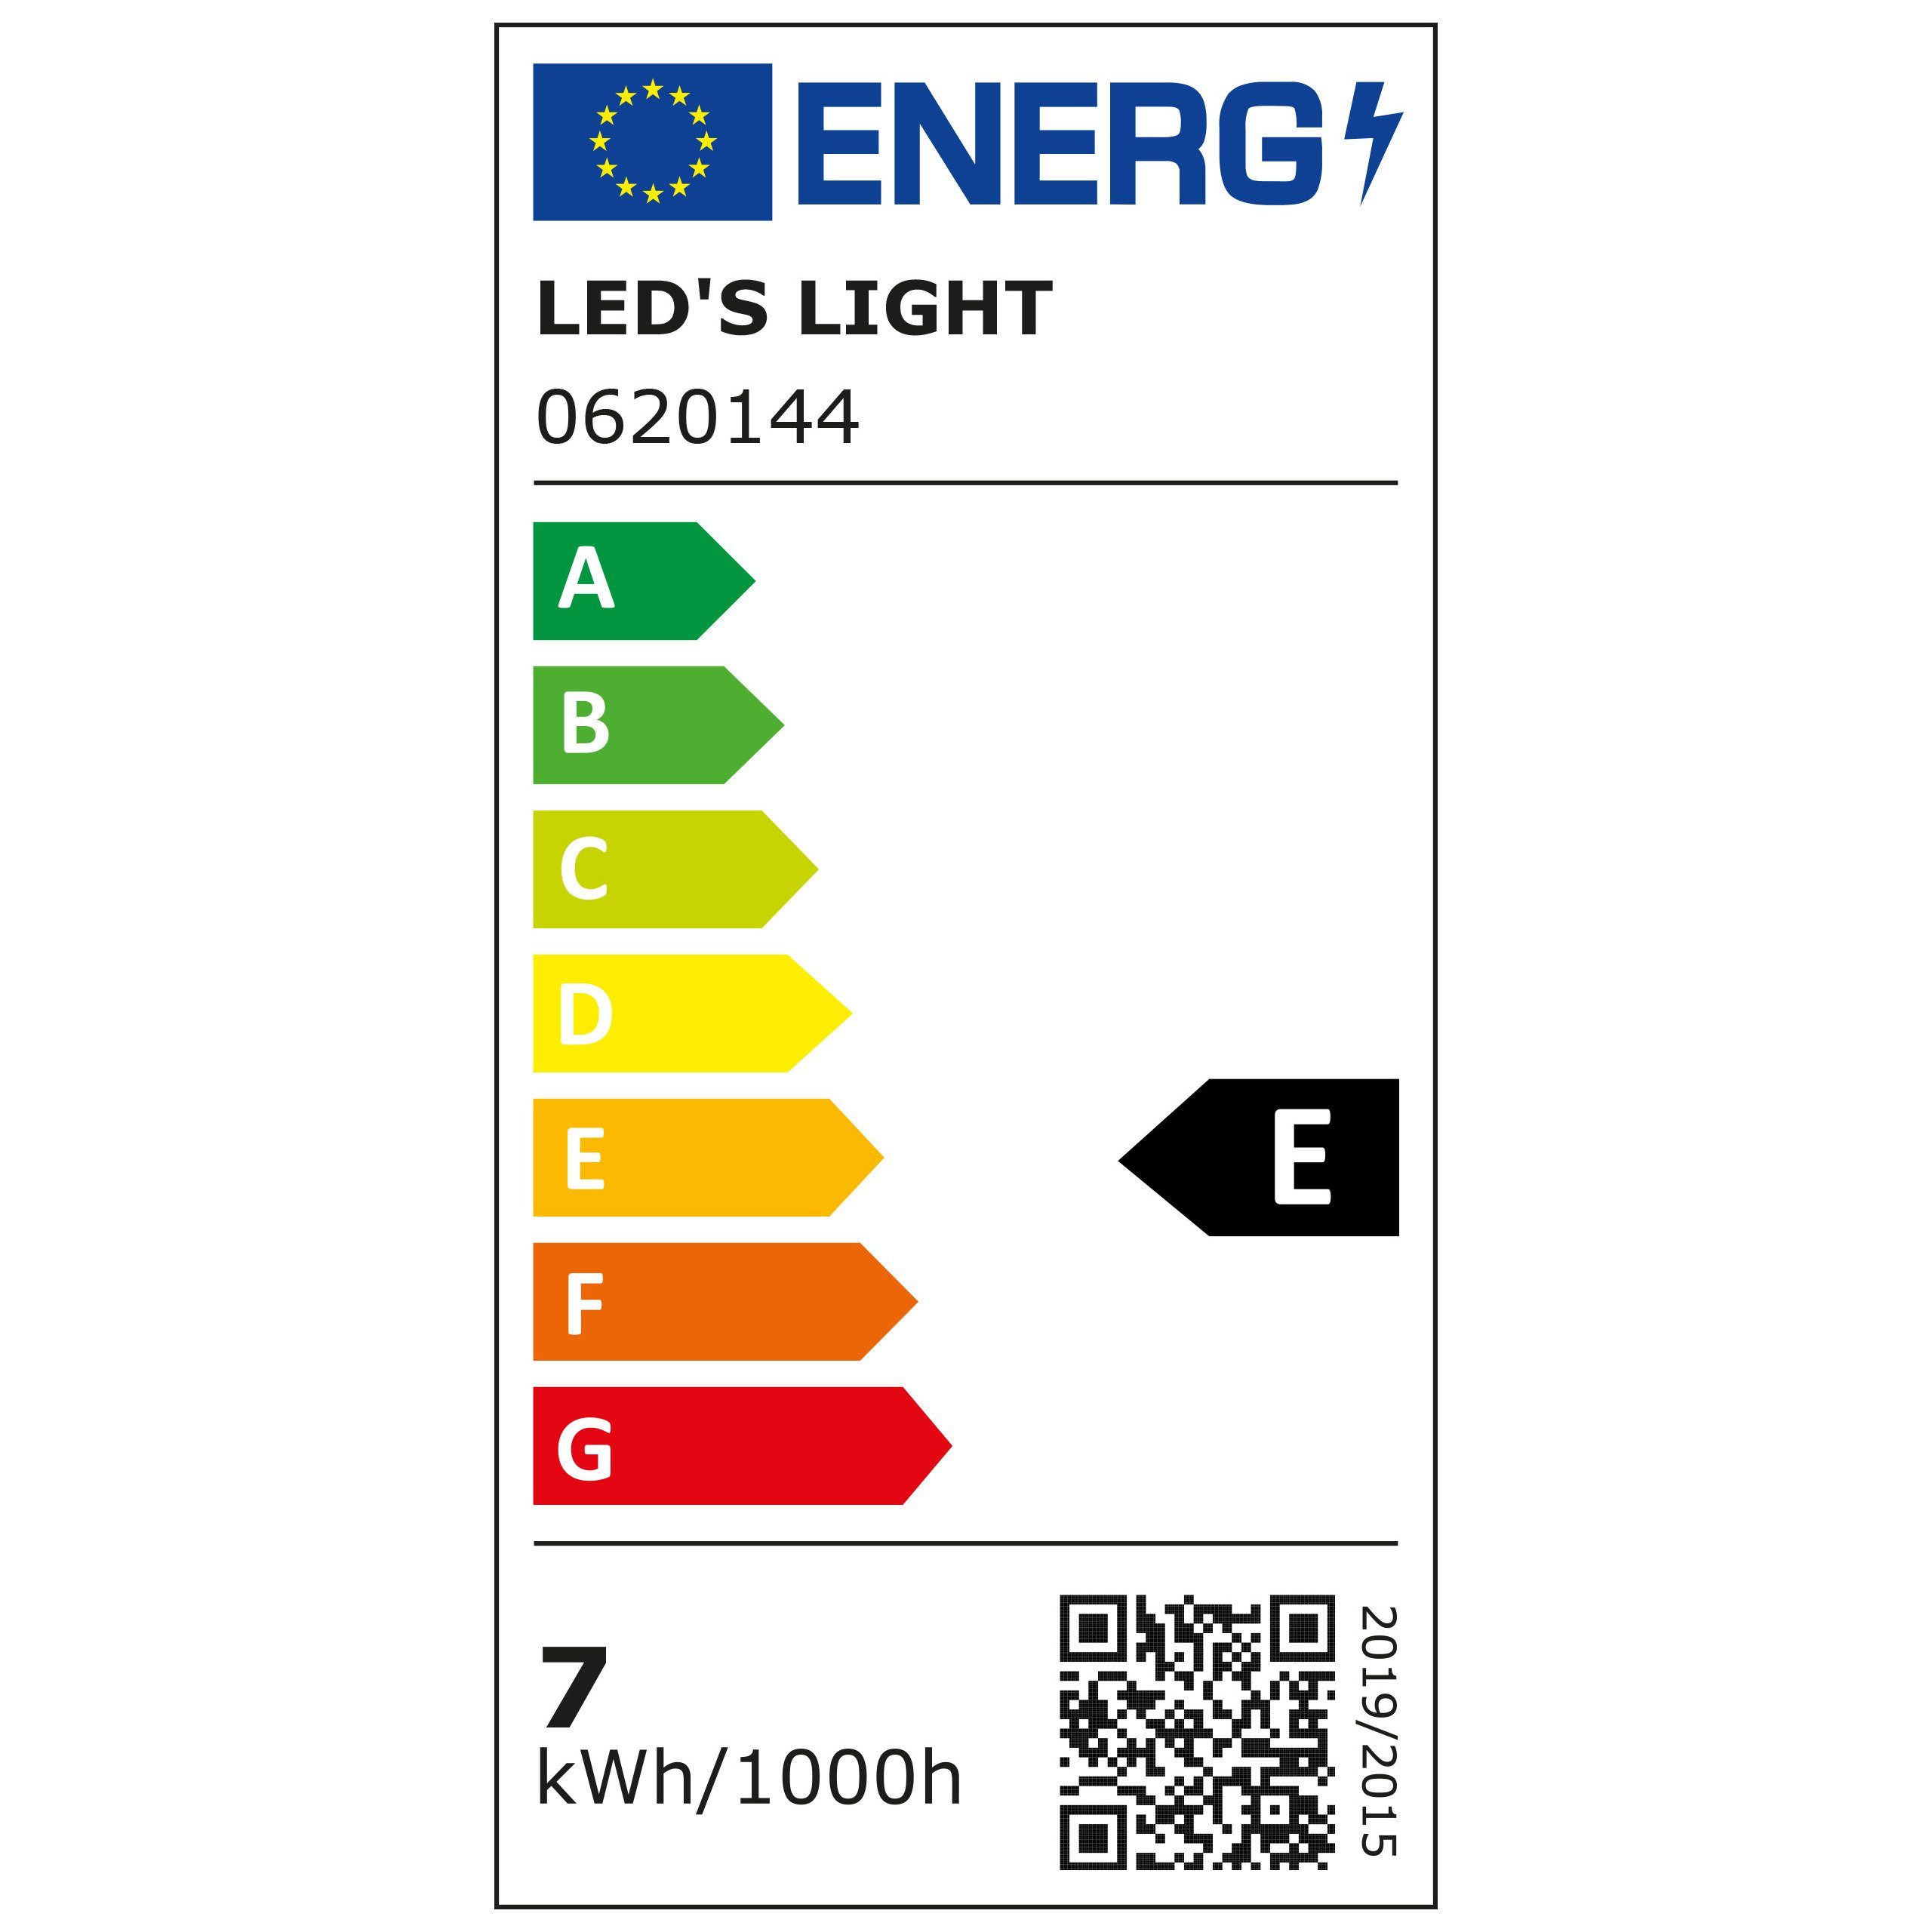 LED's Glühbirne, LED-Leuchtmittel LED light Klar 0620144 7W warmweiß E27 dimmbar E27, A60